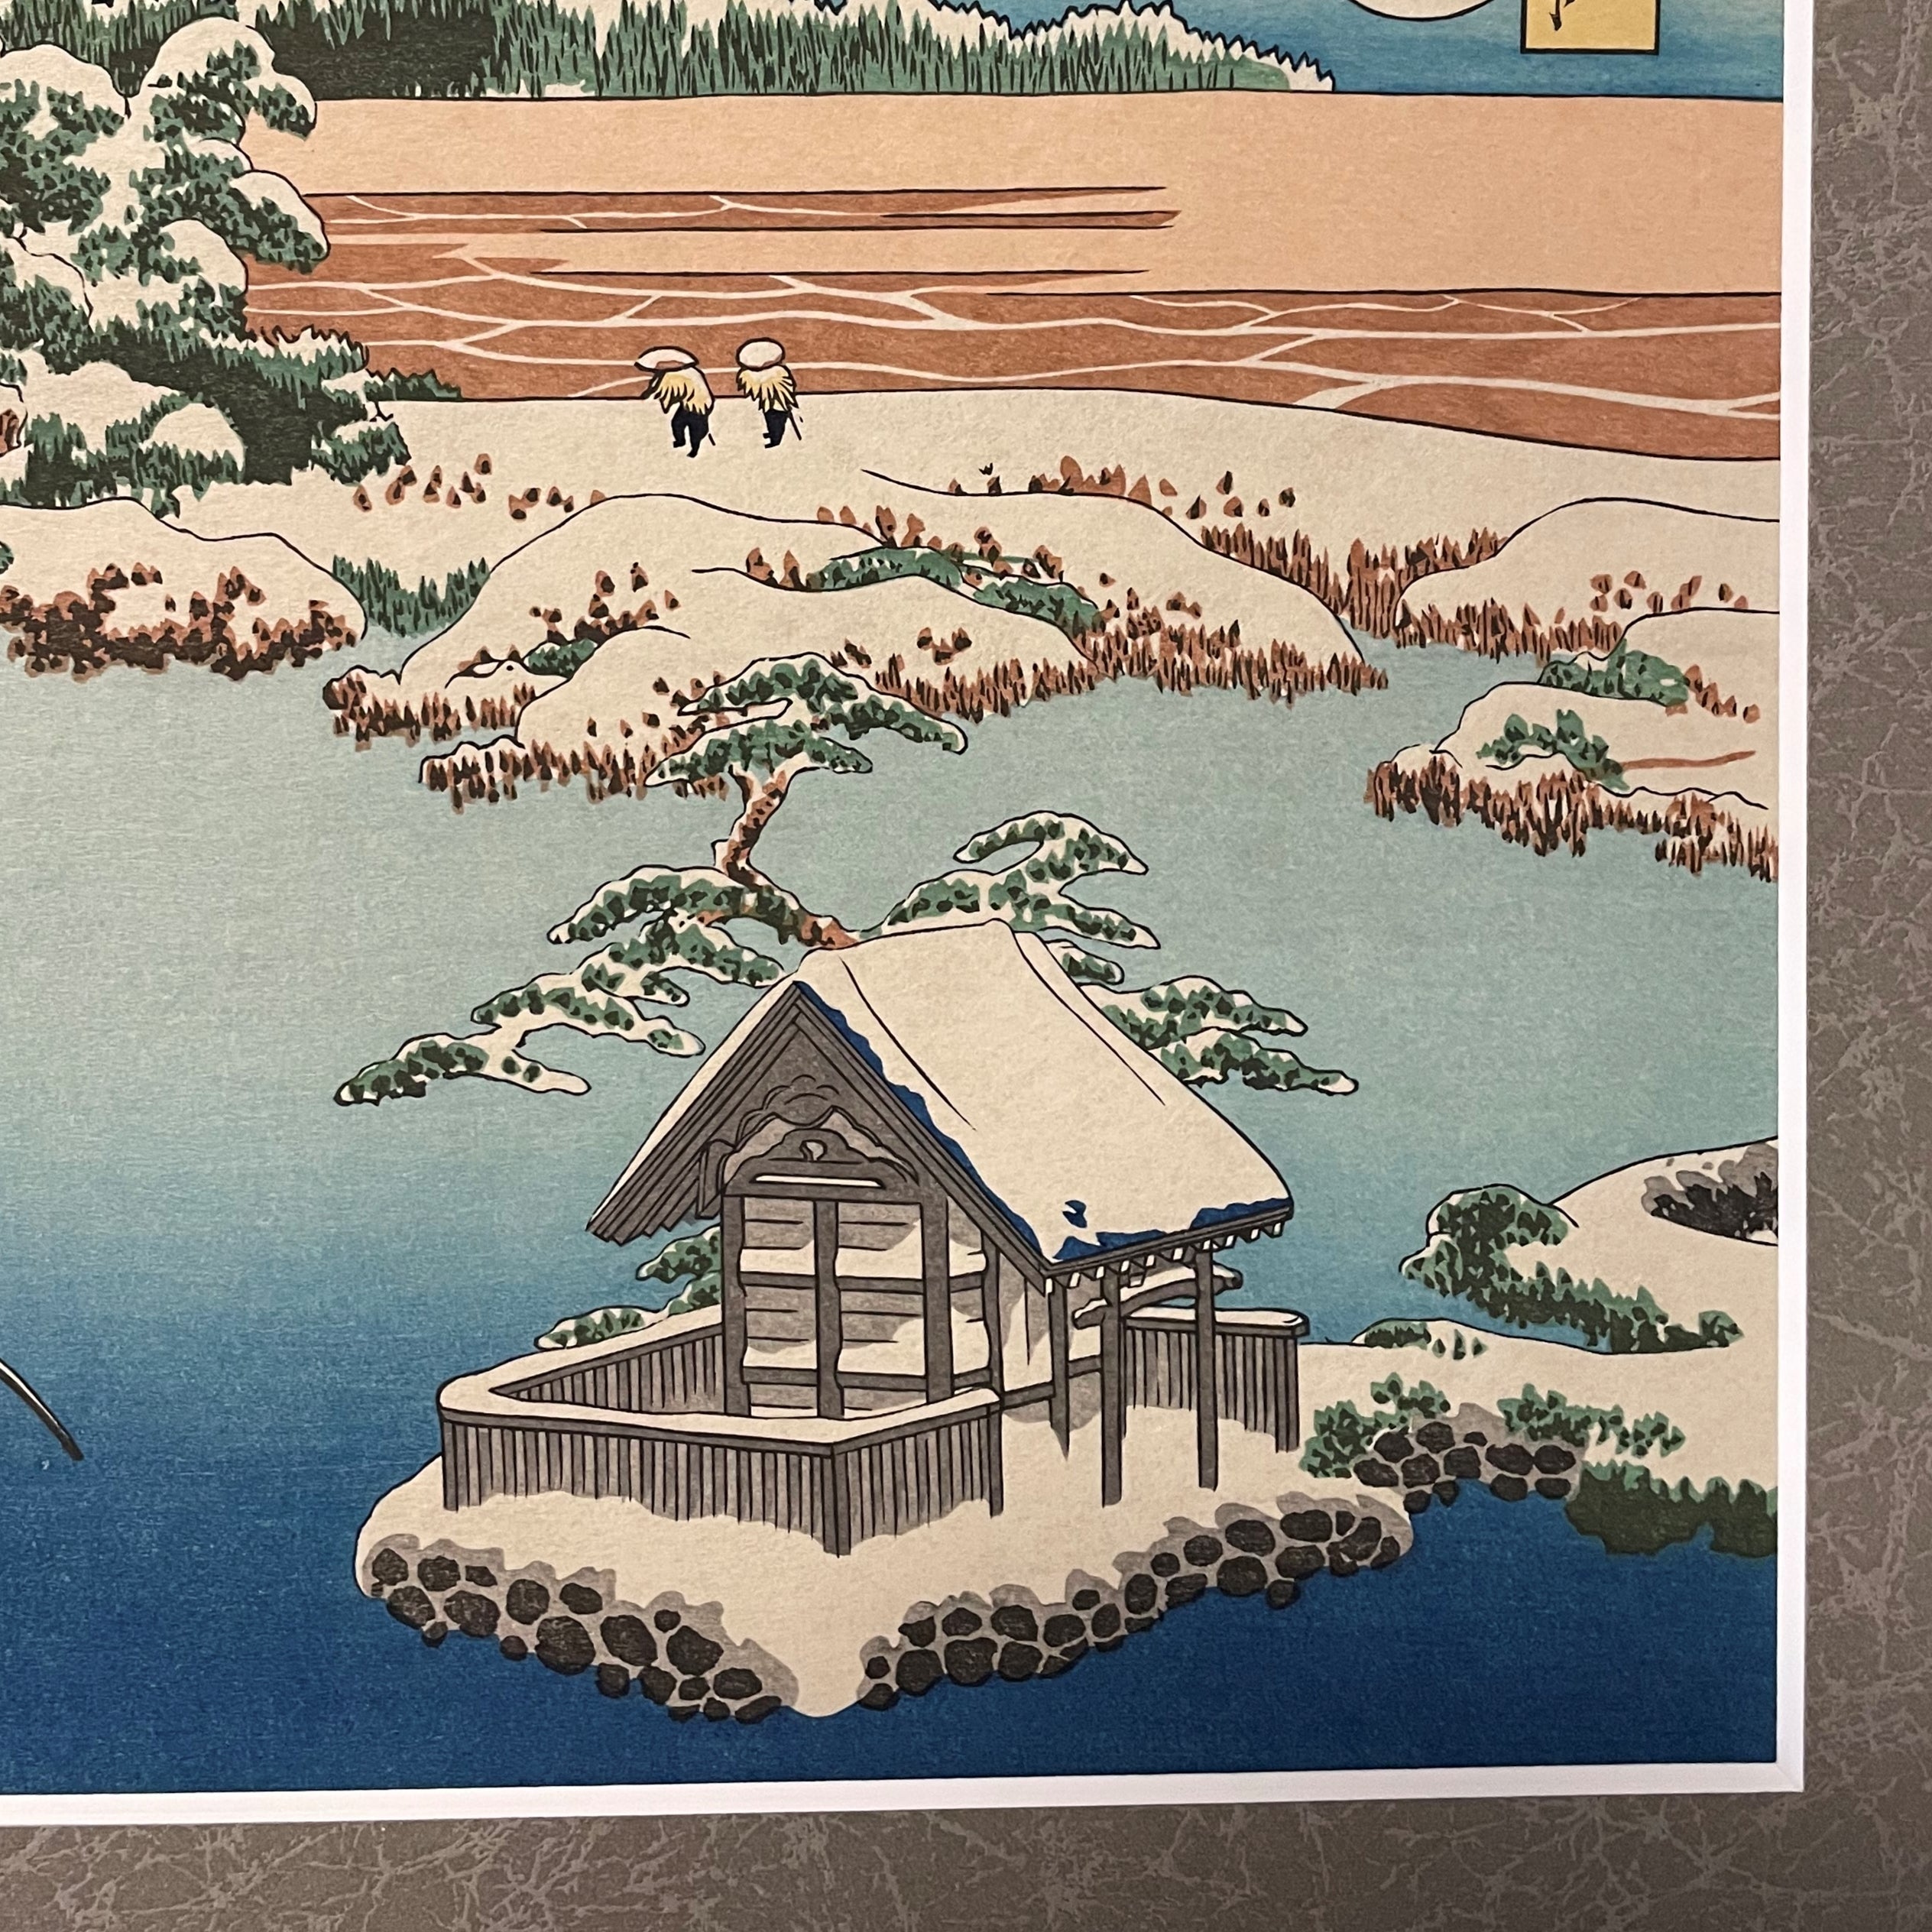 The series of Snow, Moon and Flower (Setsugekka) 3 sets (Woodblock Print)